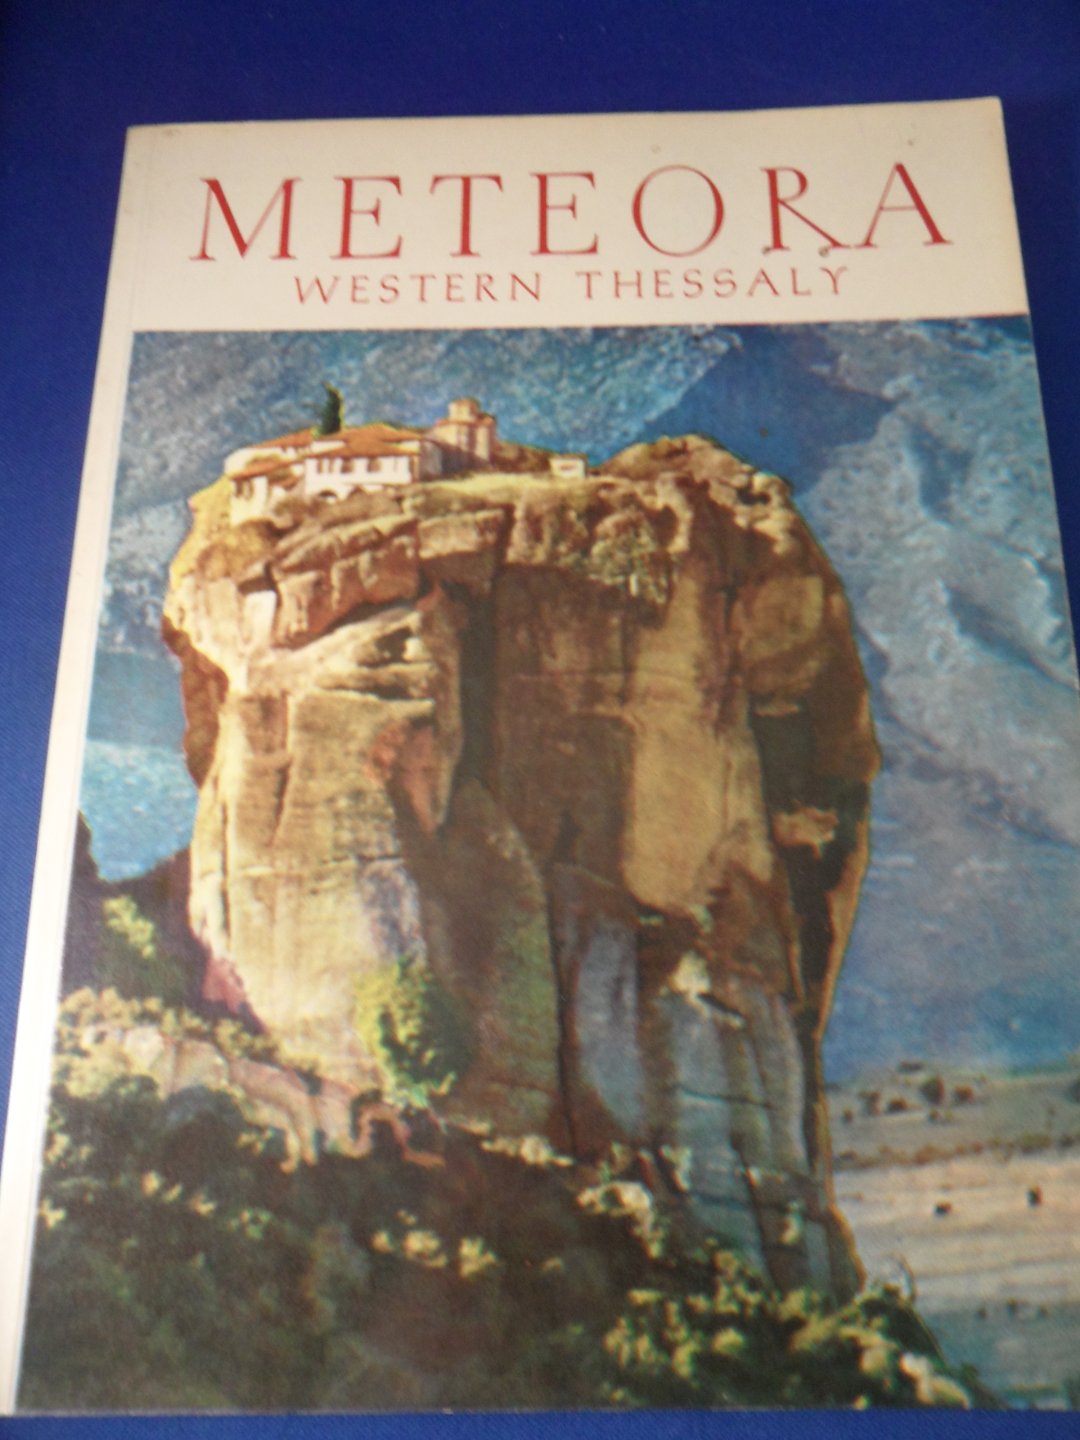 Papadopoulos, Stelios - Meteora, western thessaly